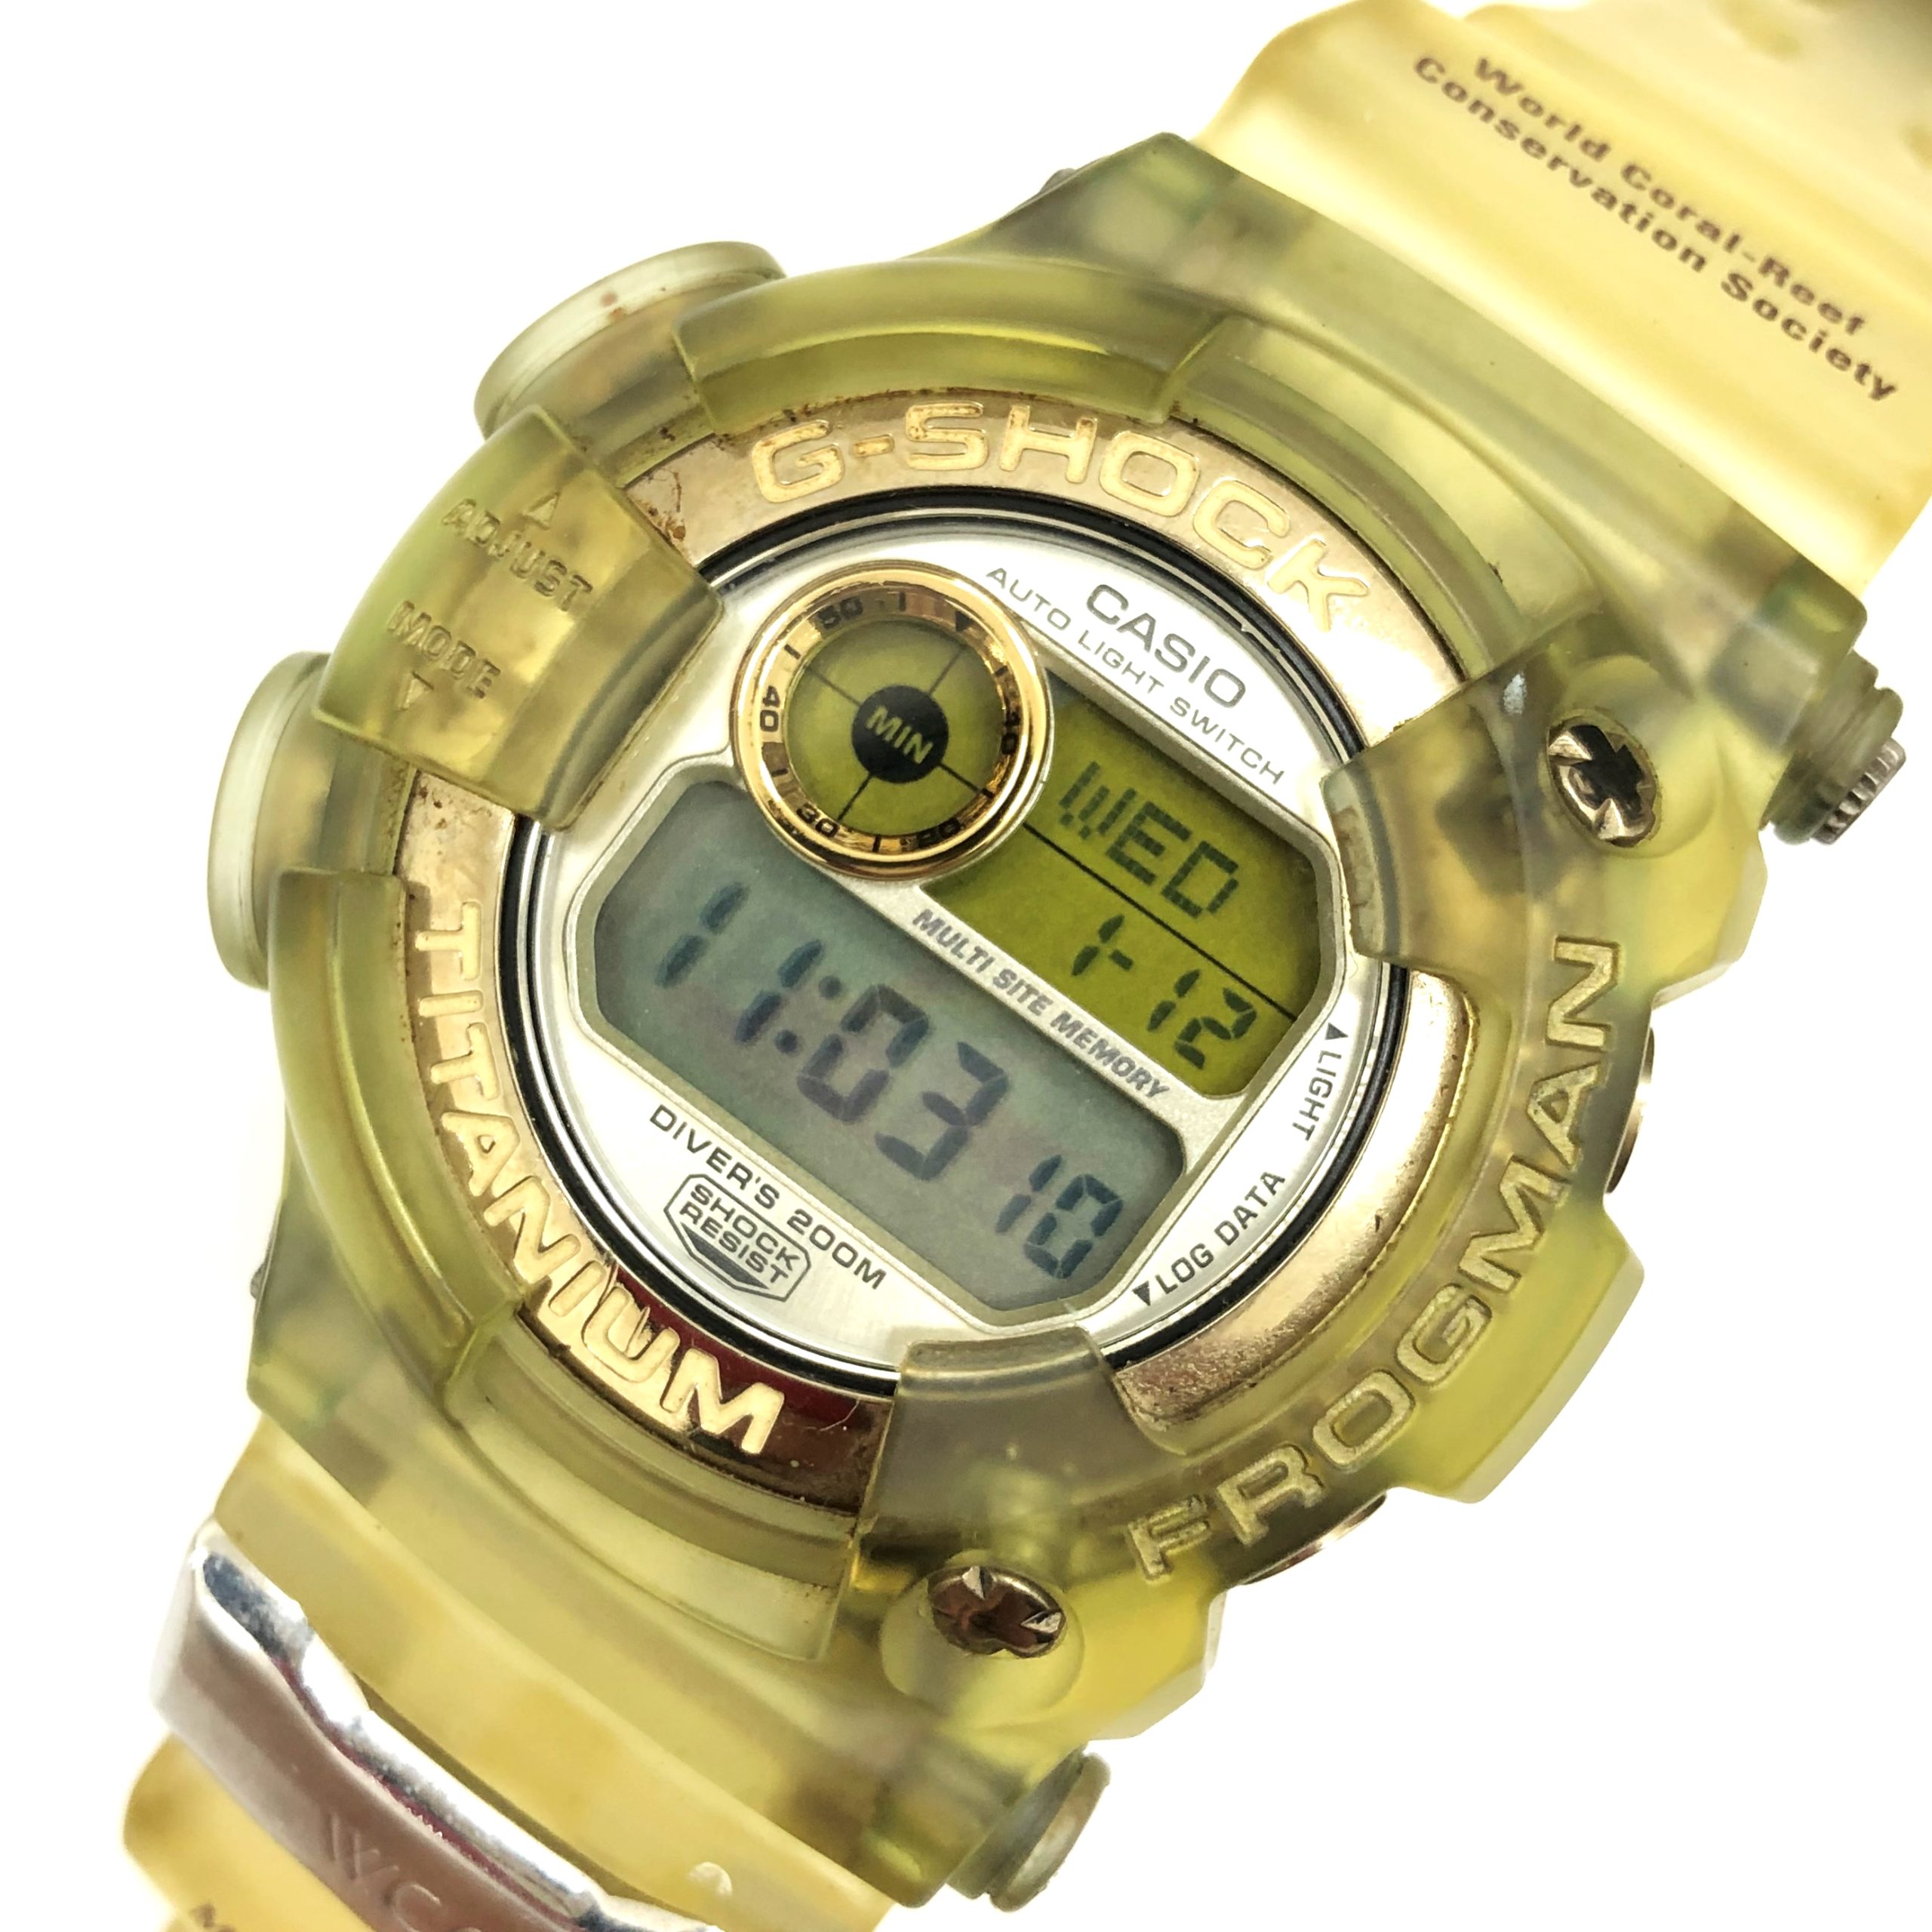 【CASIO/カシオ】G-SHOCK/Gショック フロッグマン W.C.C.S. DW-9901WC デジタル腕時計